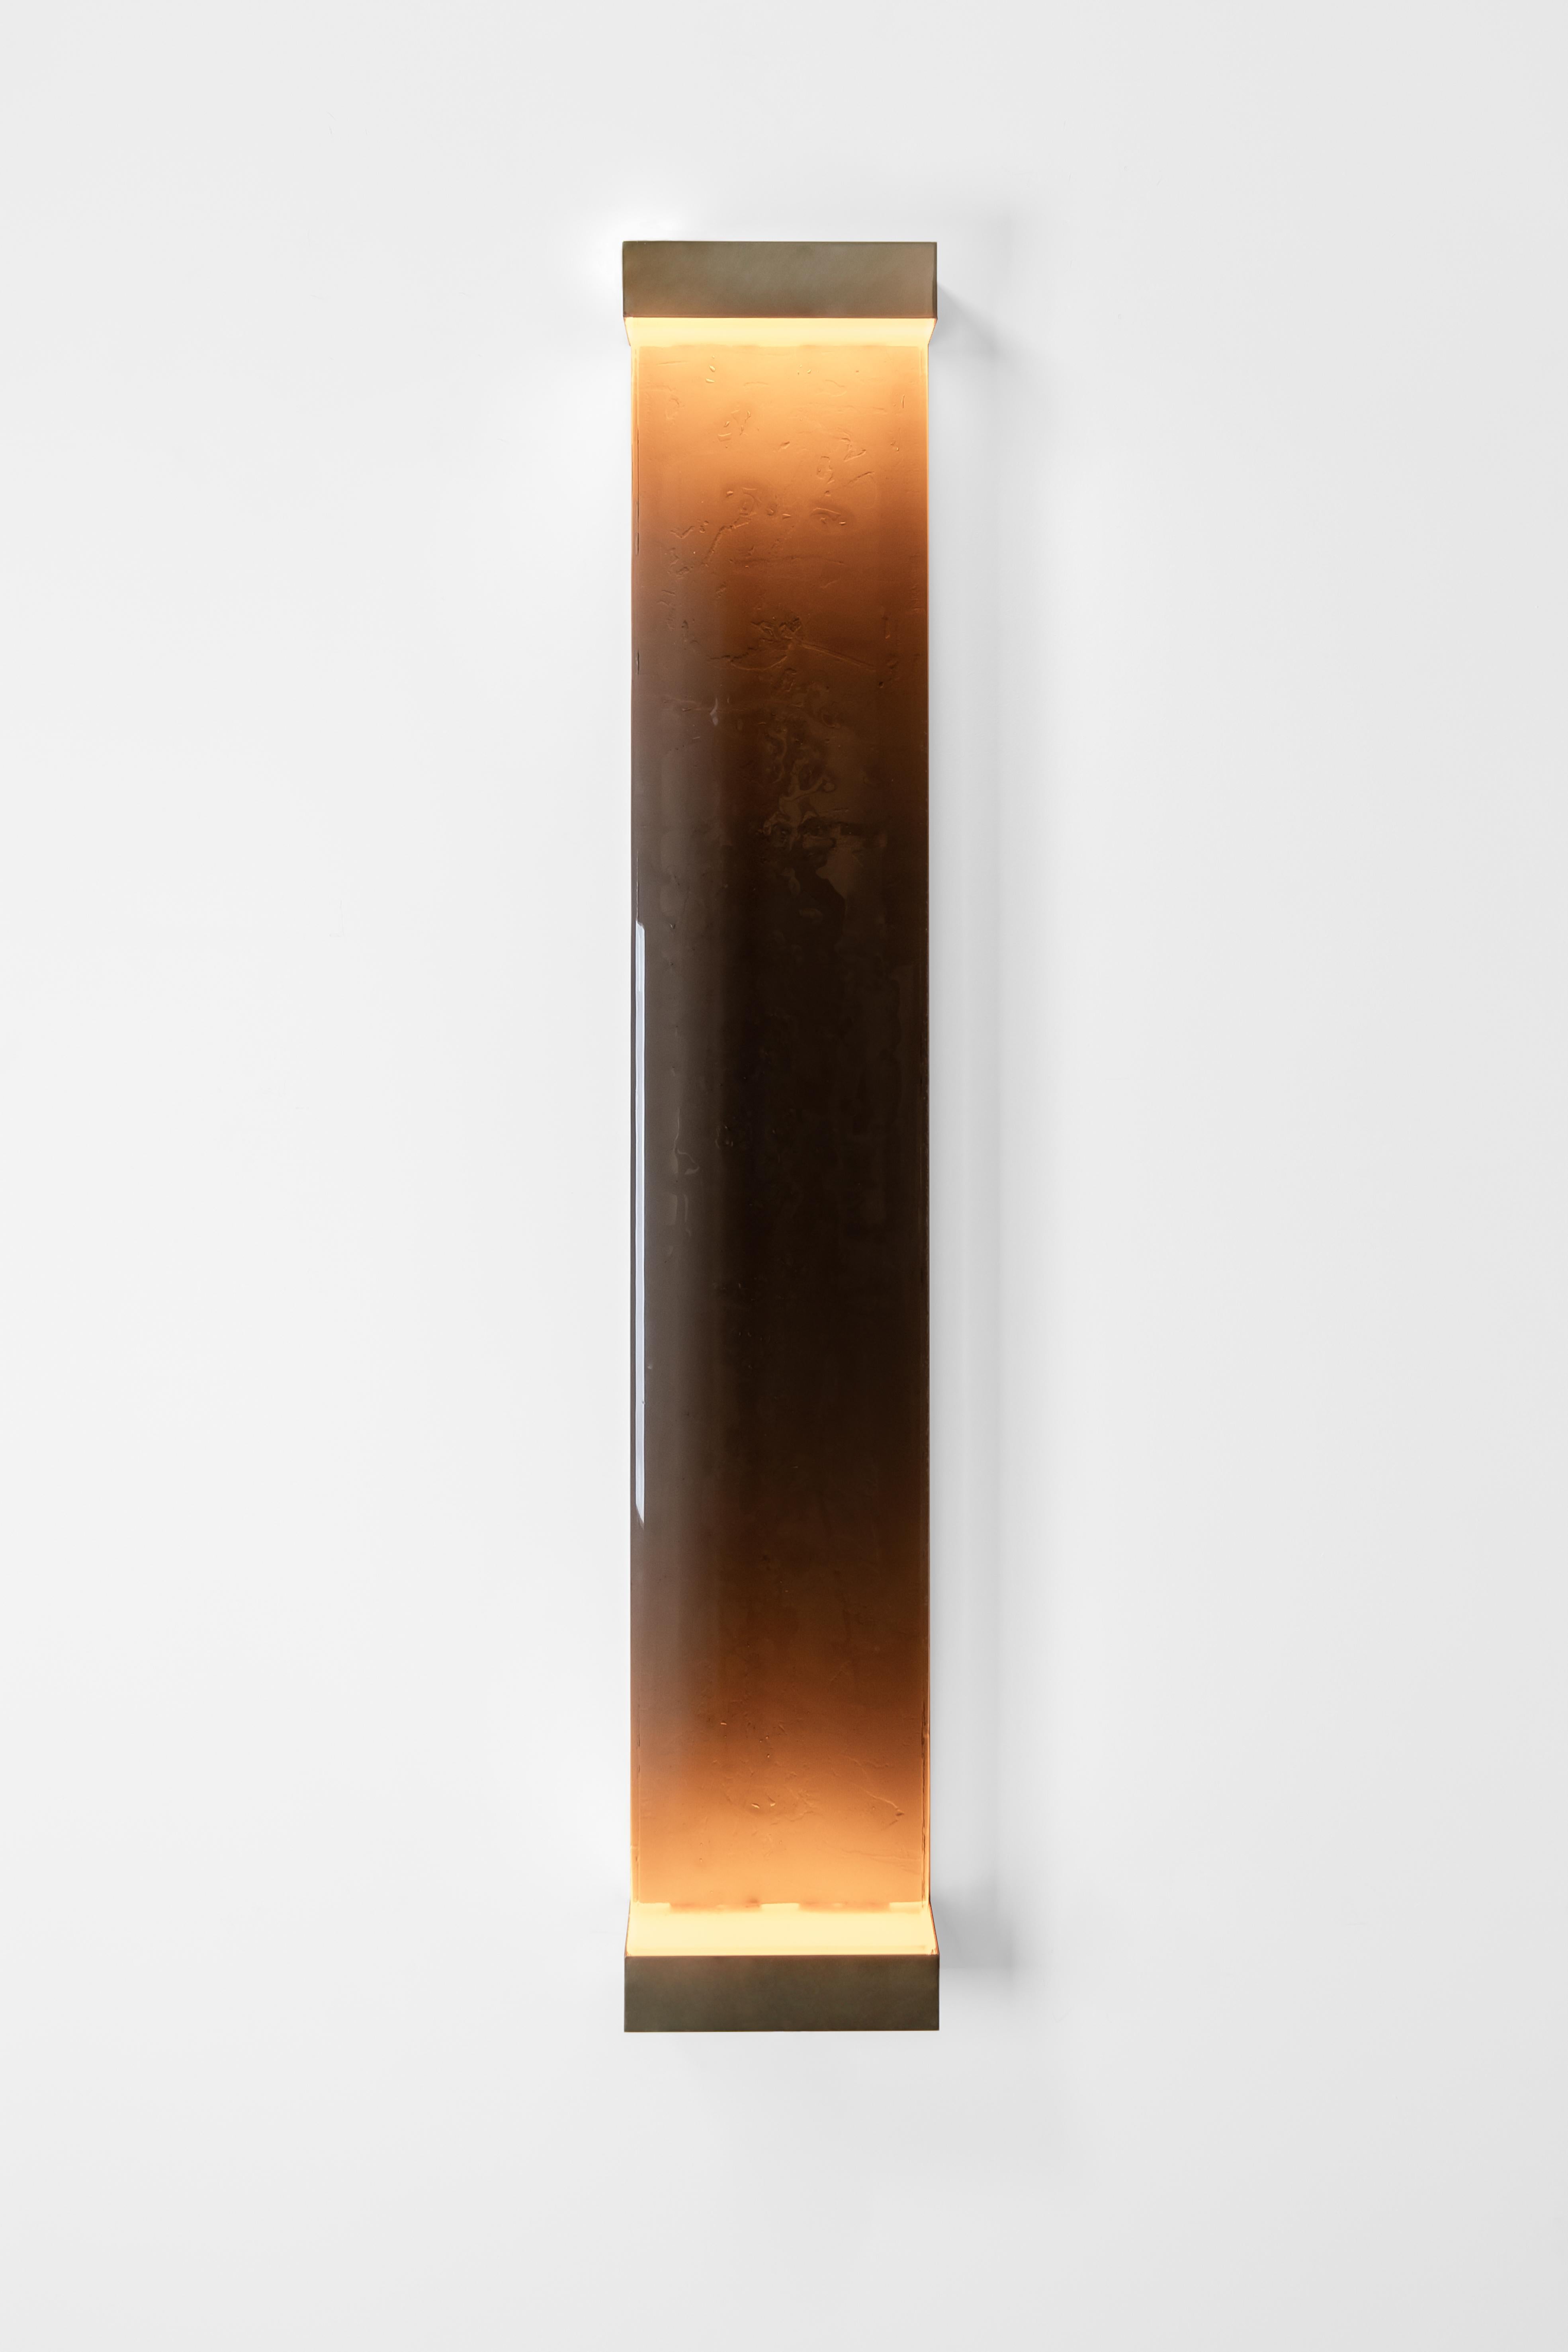 Jud Wall Lamp by Draga & Aurel For Sale 3